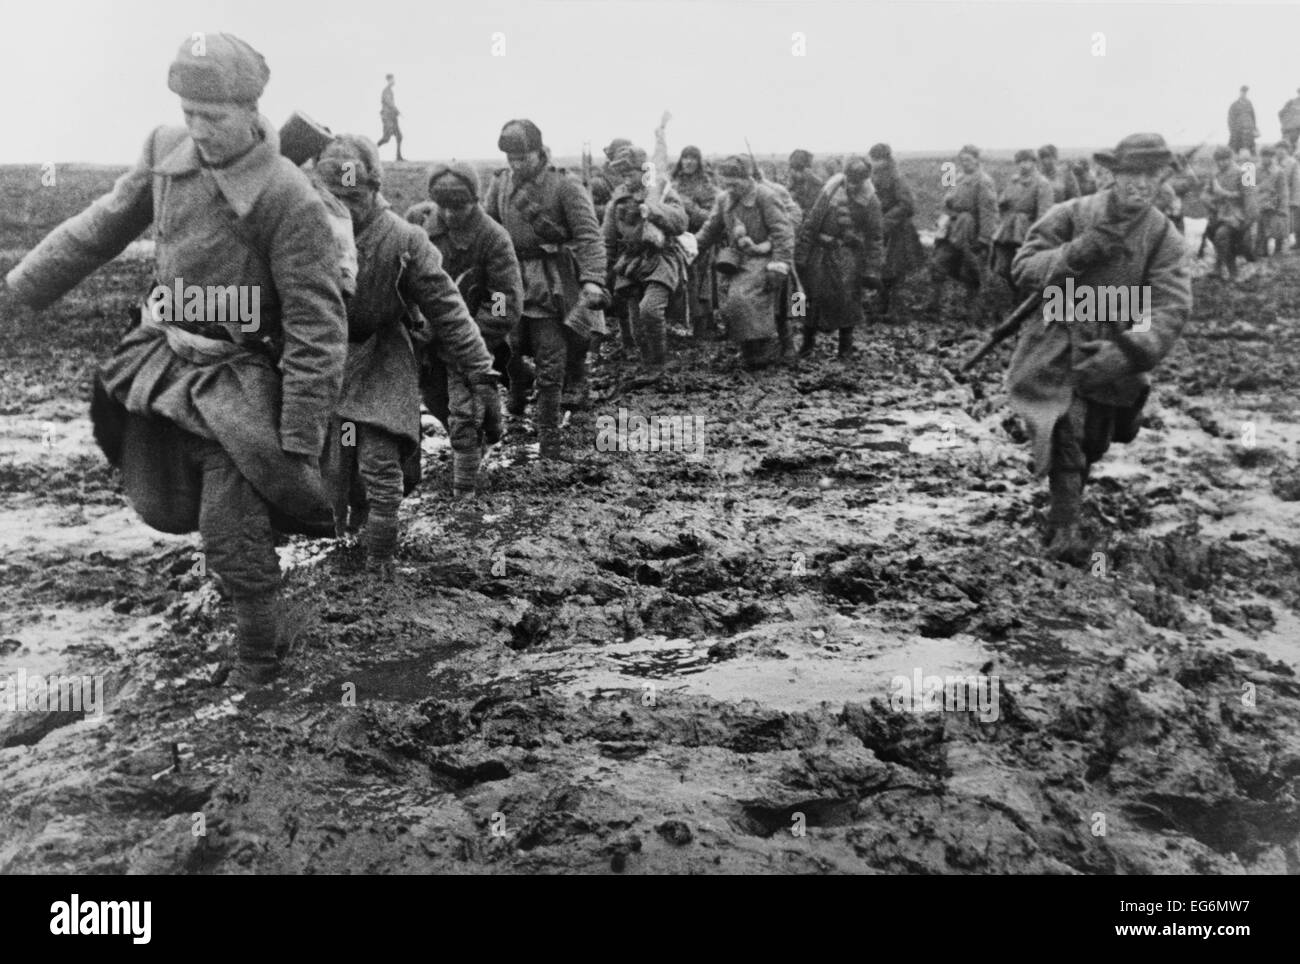 Soviet (Russian) soldiers marching through a muddy field near Odessa. Ca. 1944. World War 2 photograph by Georgi Zelma. Stock Photo